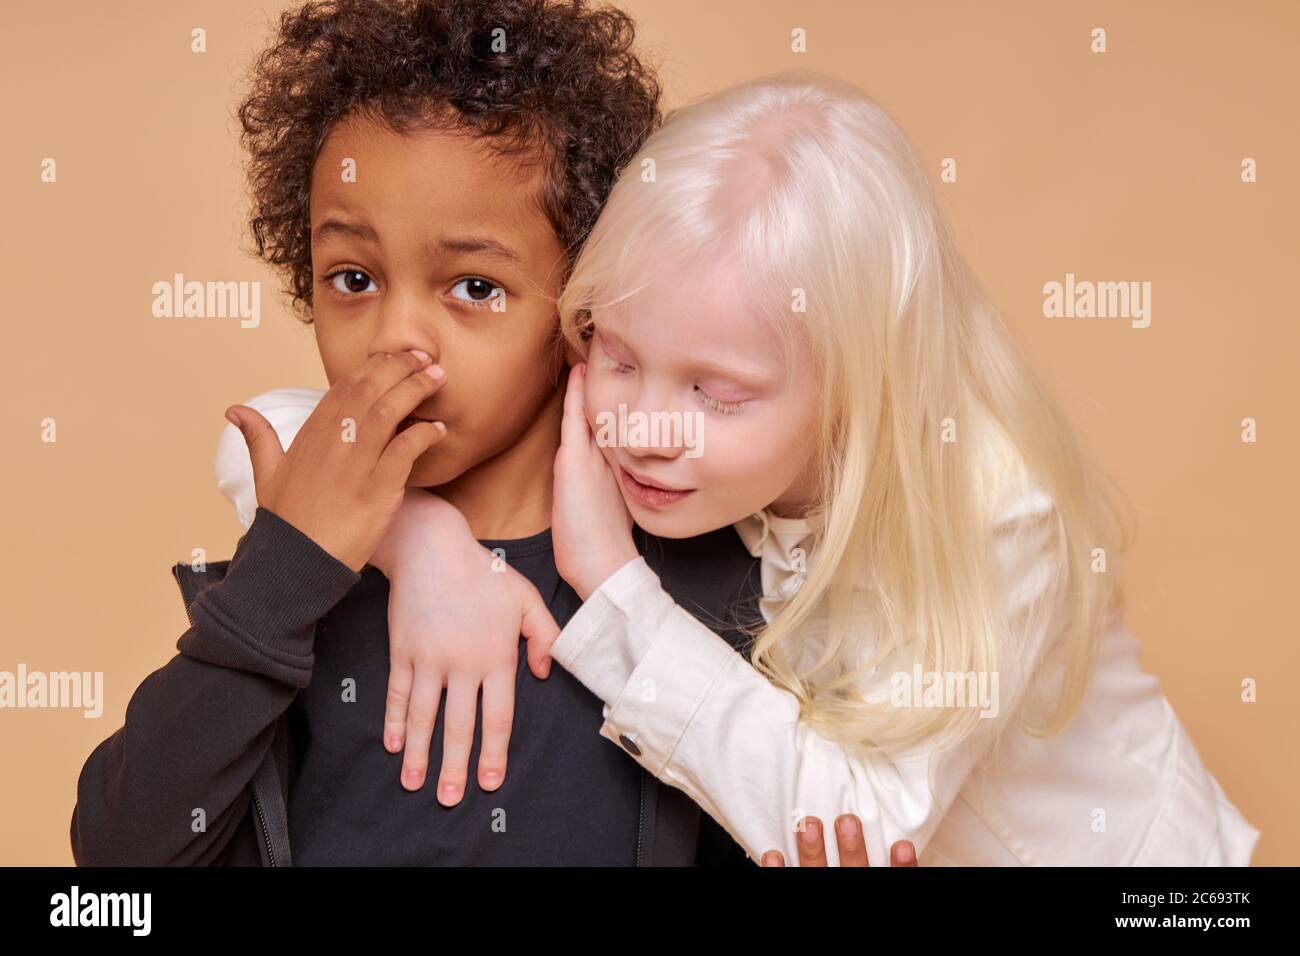 Sensitive Albino Child Girl Hug Dark Skinned Boy Isolated In Studio Adorable Girl With White Hair Has Tender Feelings For The Boy Stock Photo Alamy